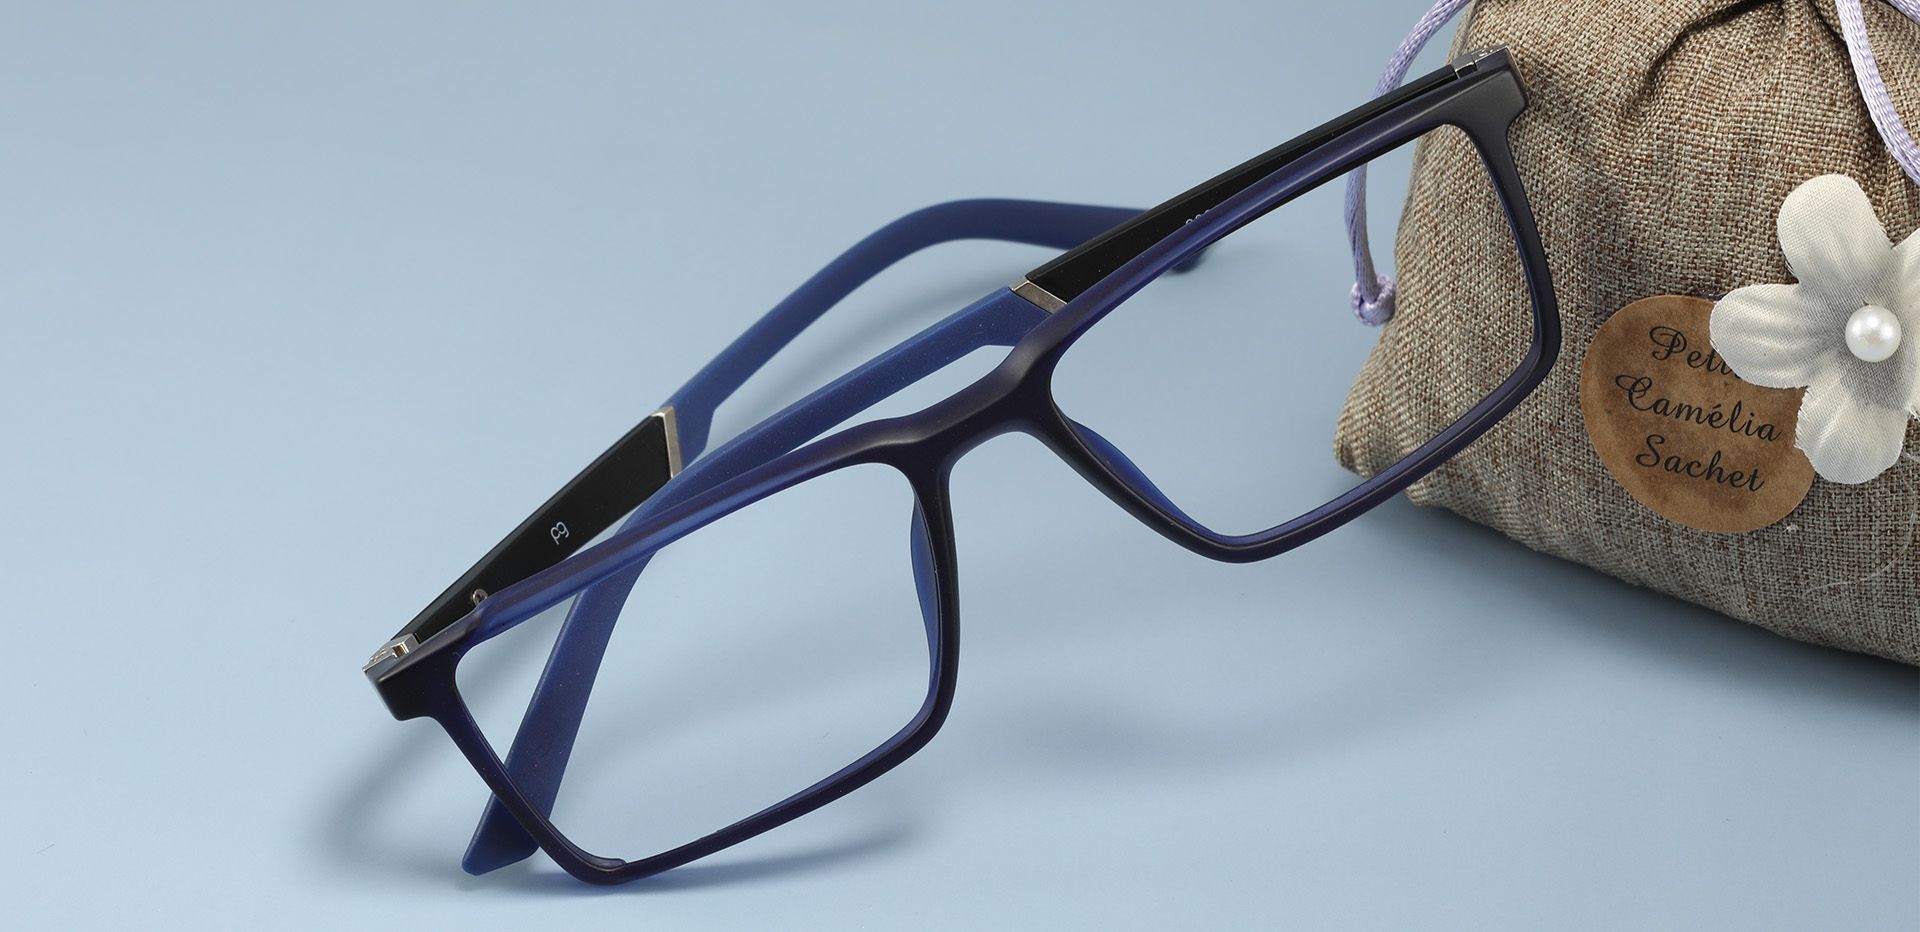 Camelia Eye Glasses Frames